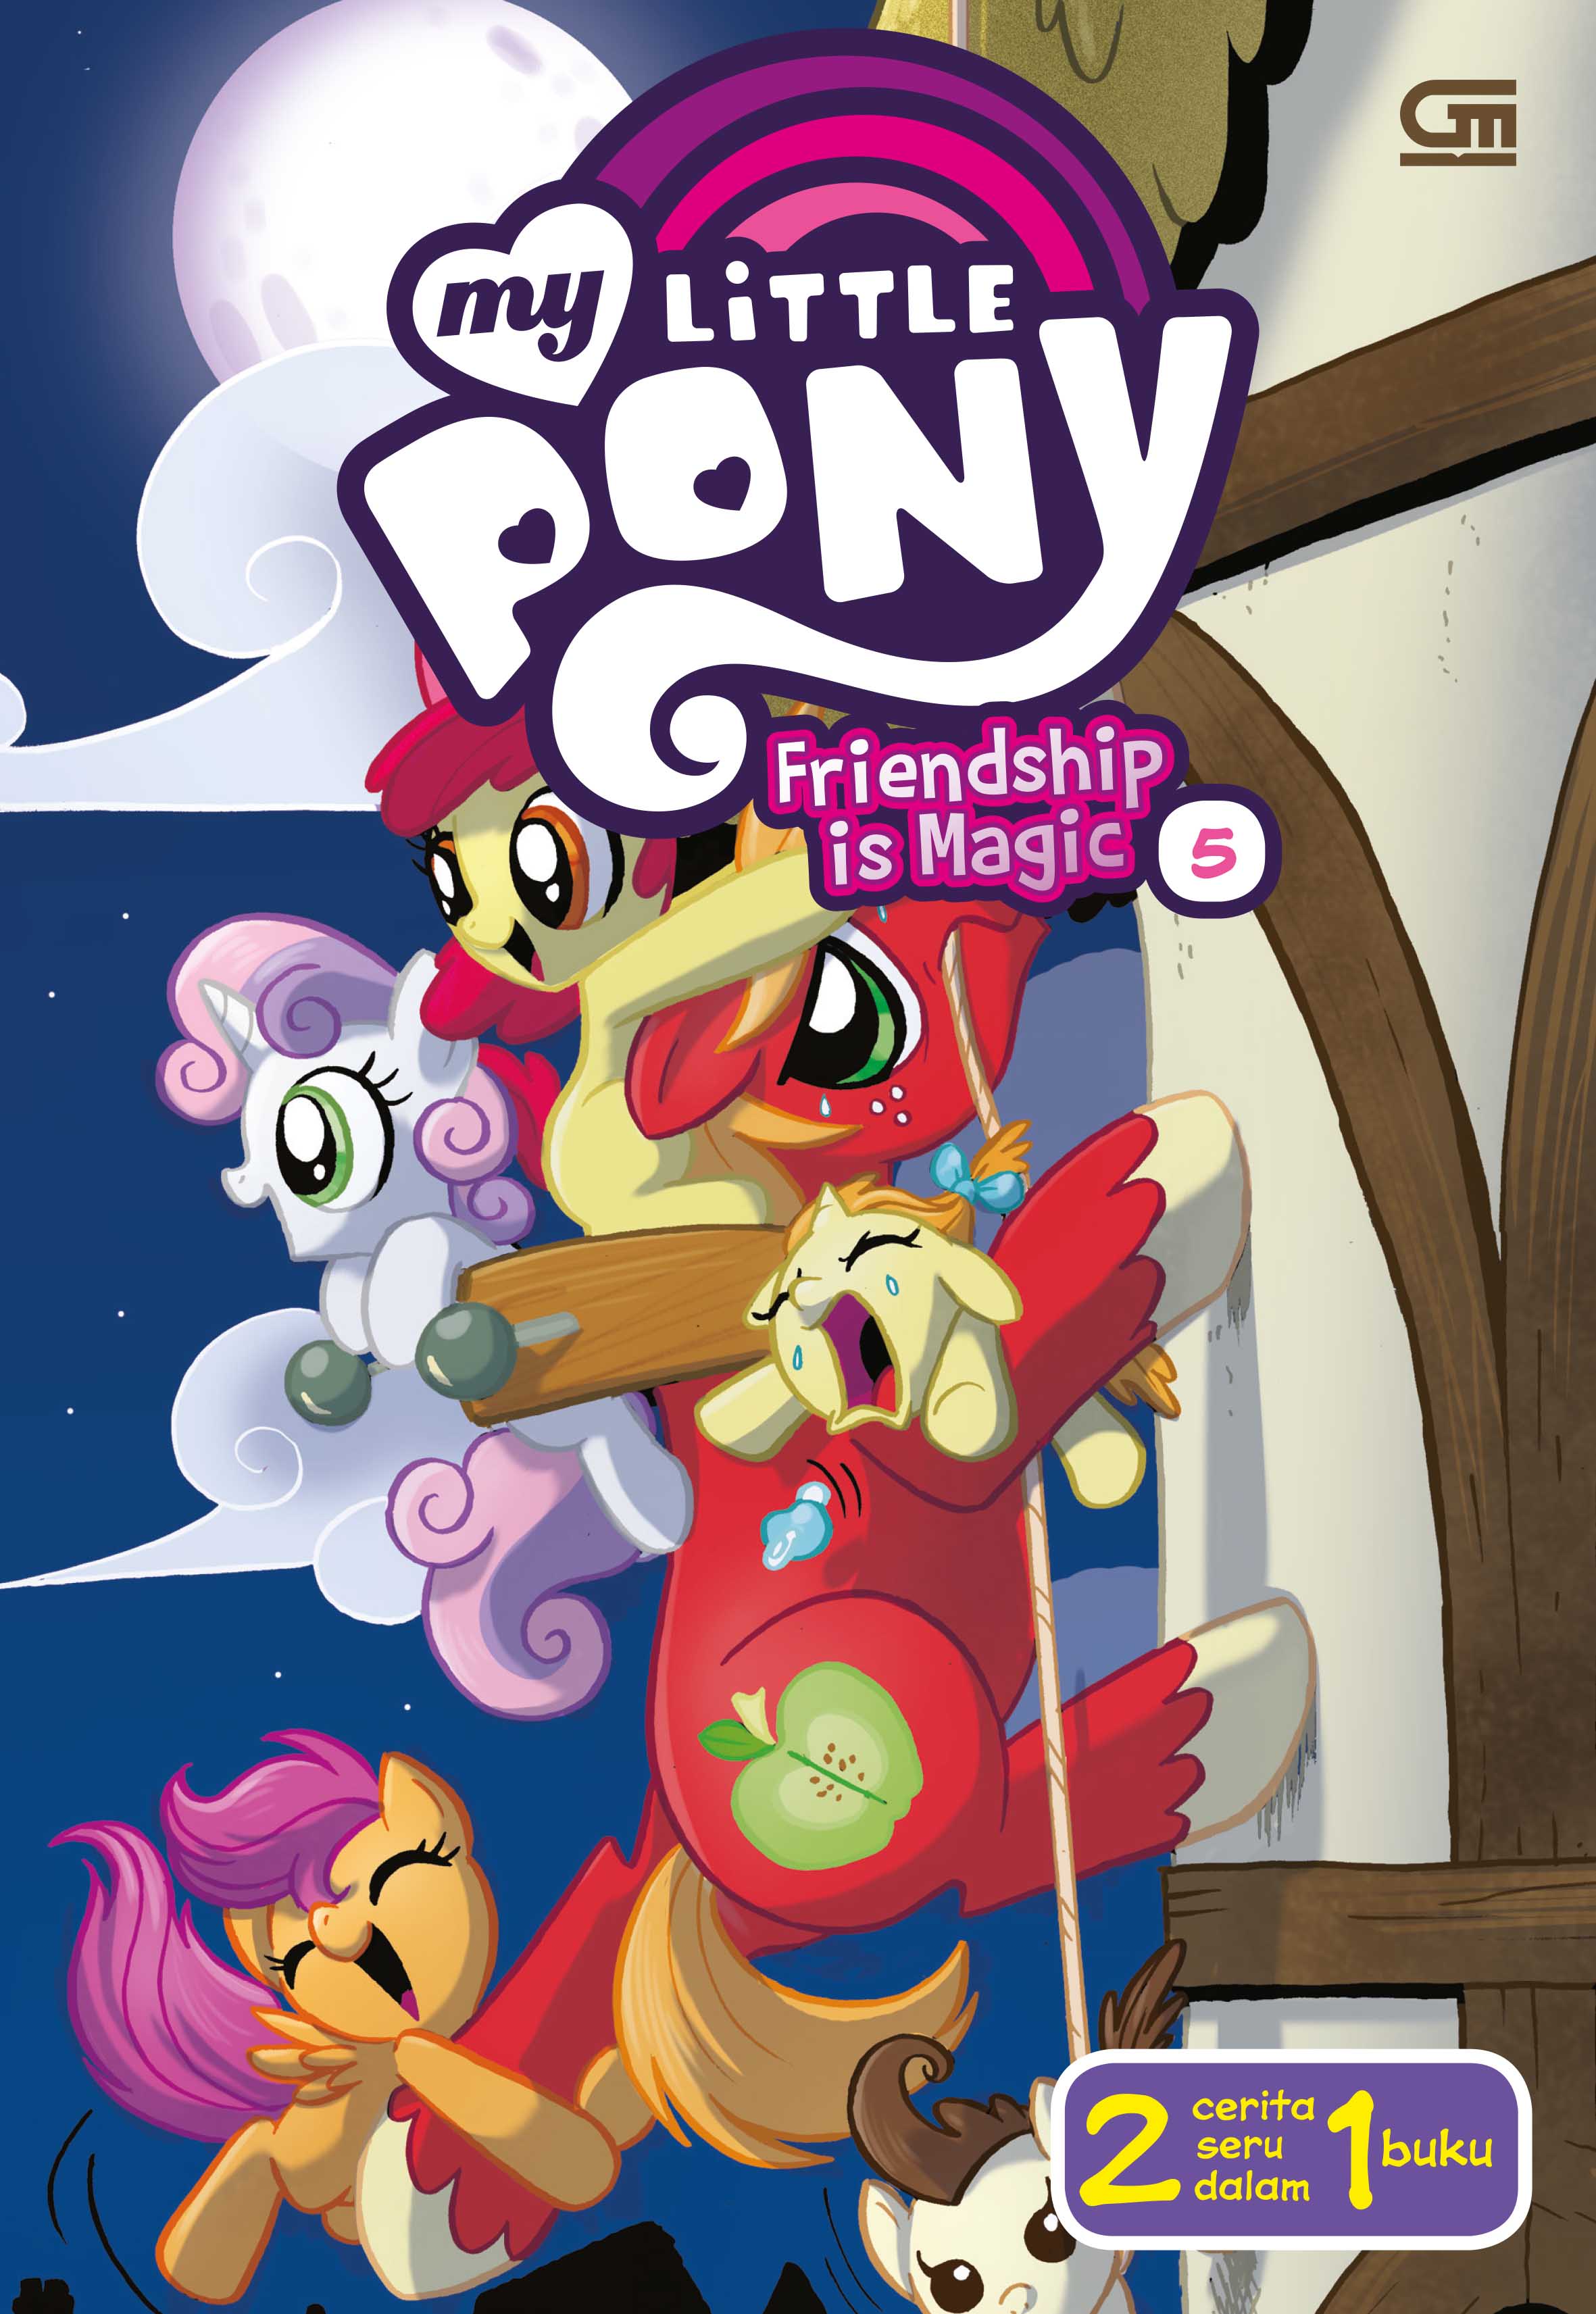 My Little Pony: Friendship is Magic#5